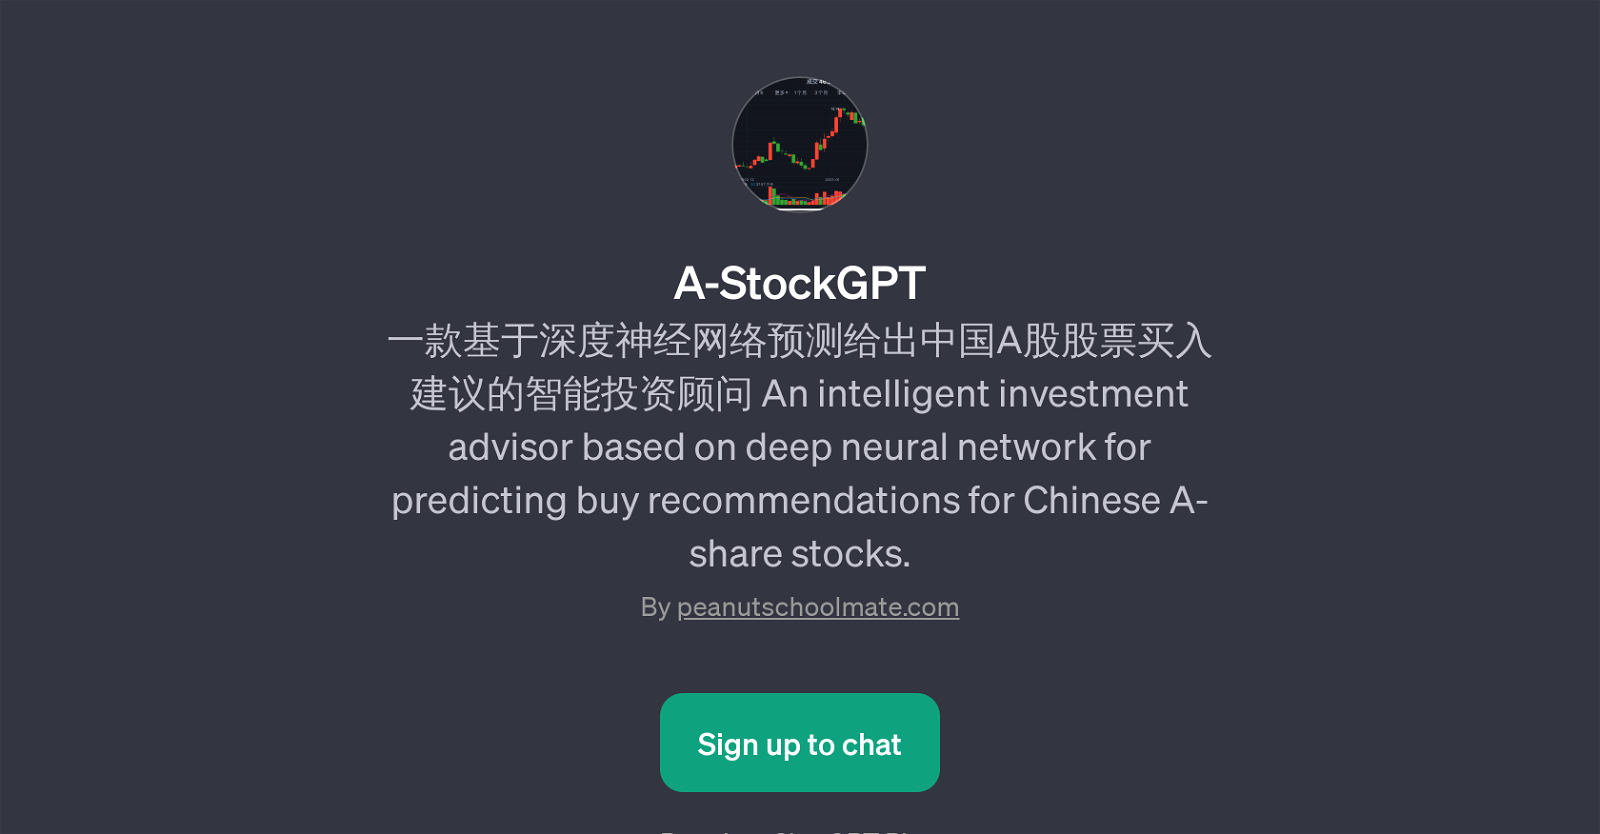 A-StockGPT website